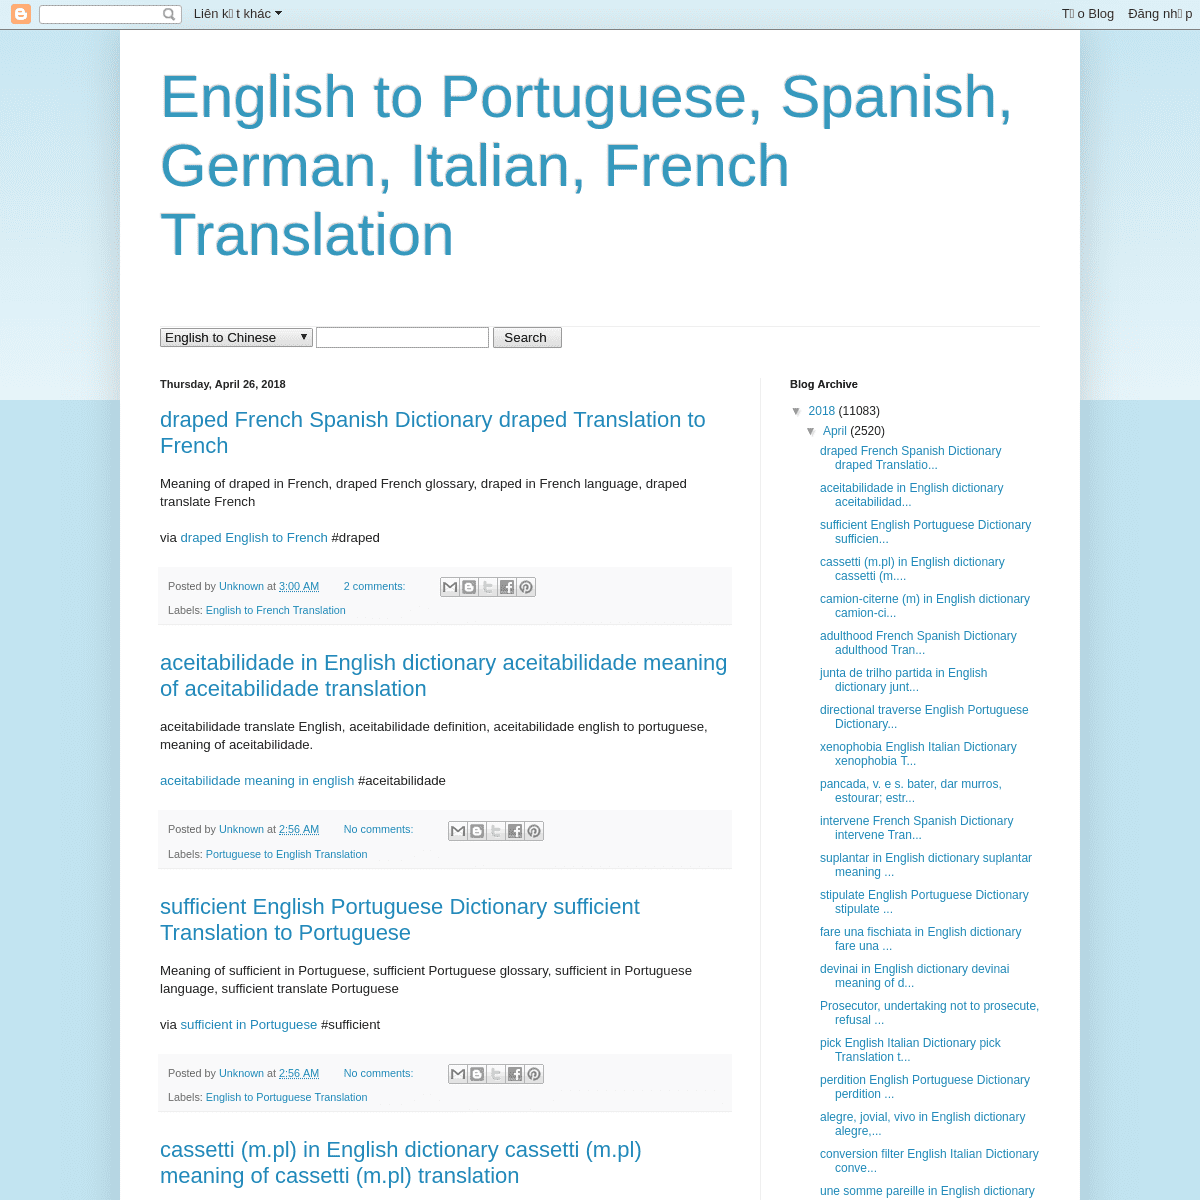 English to Portuguese, Spanish, German, Italian, French Translation